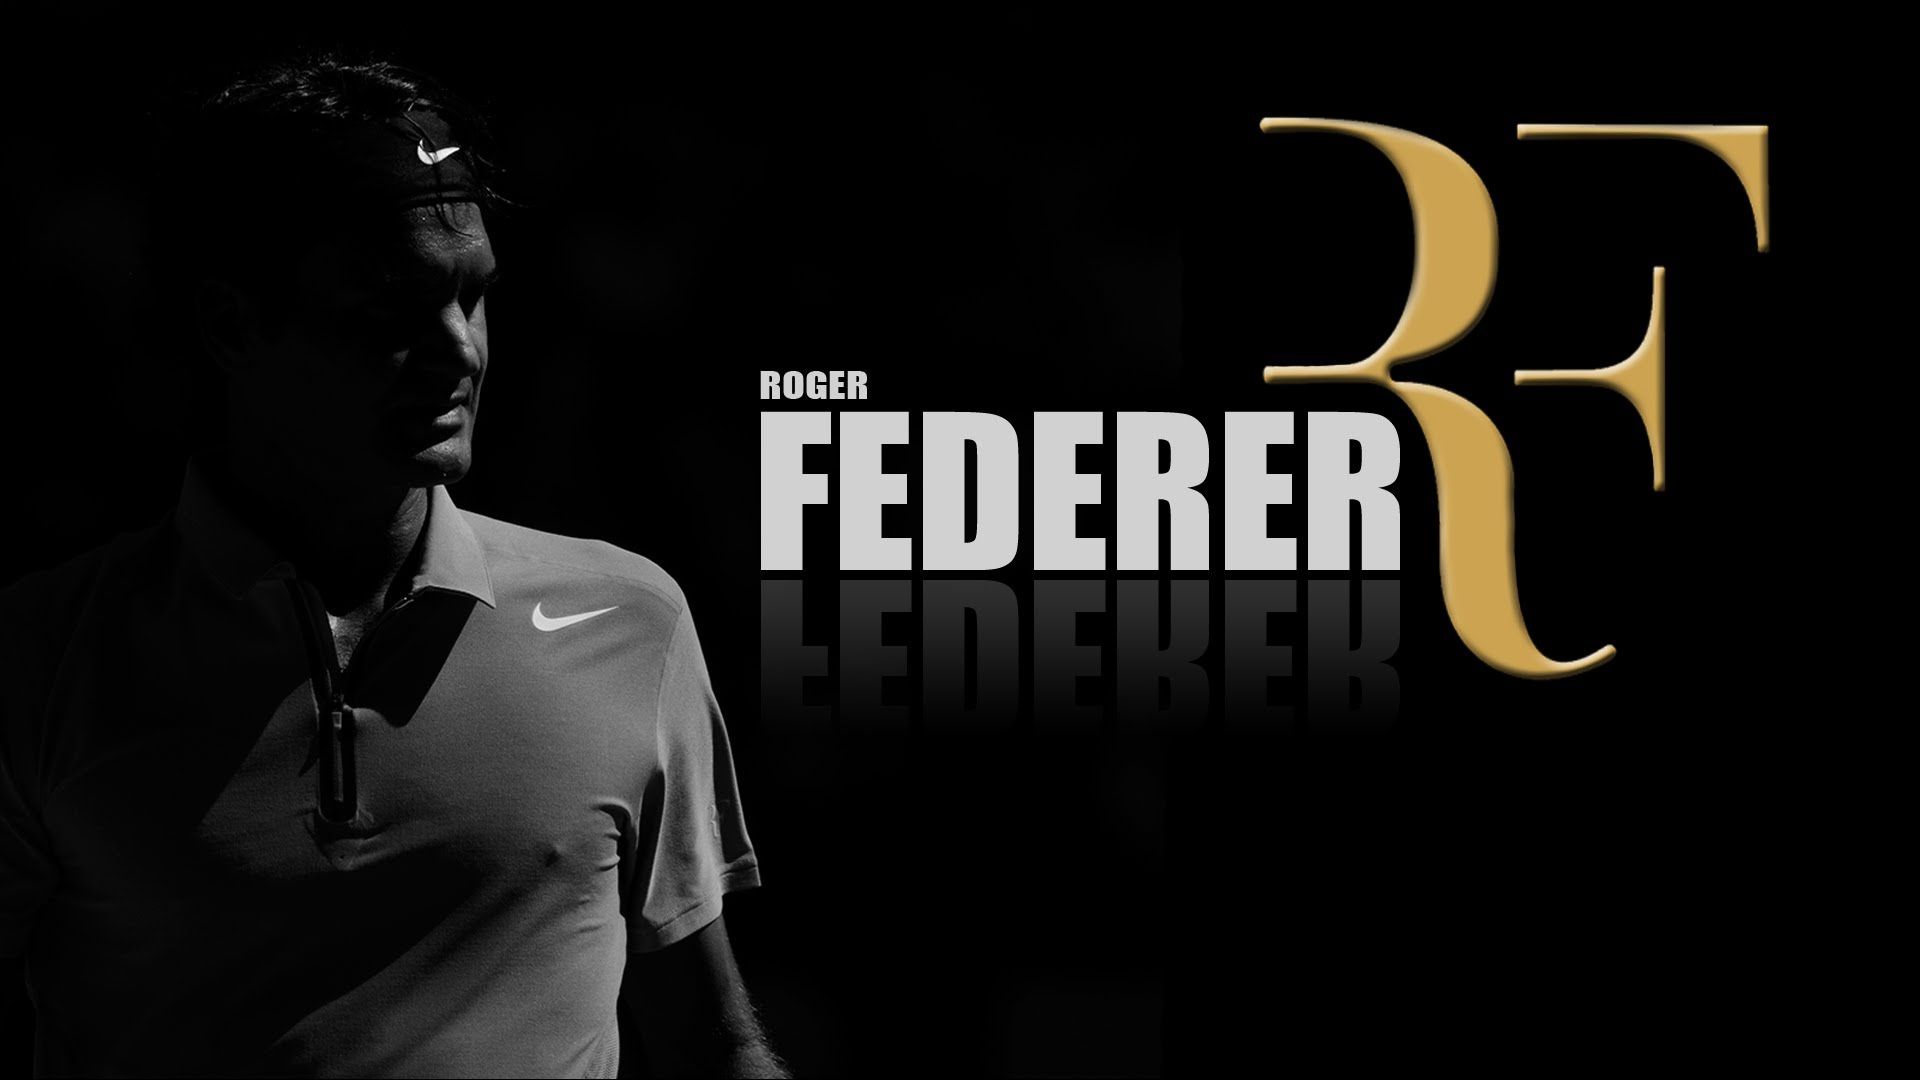 Roger Federer Logo Wallpaper Free Roger Federer Logo Background